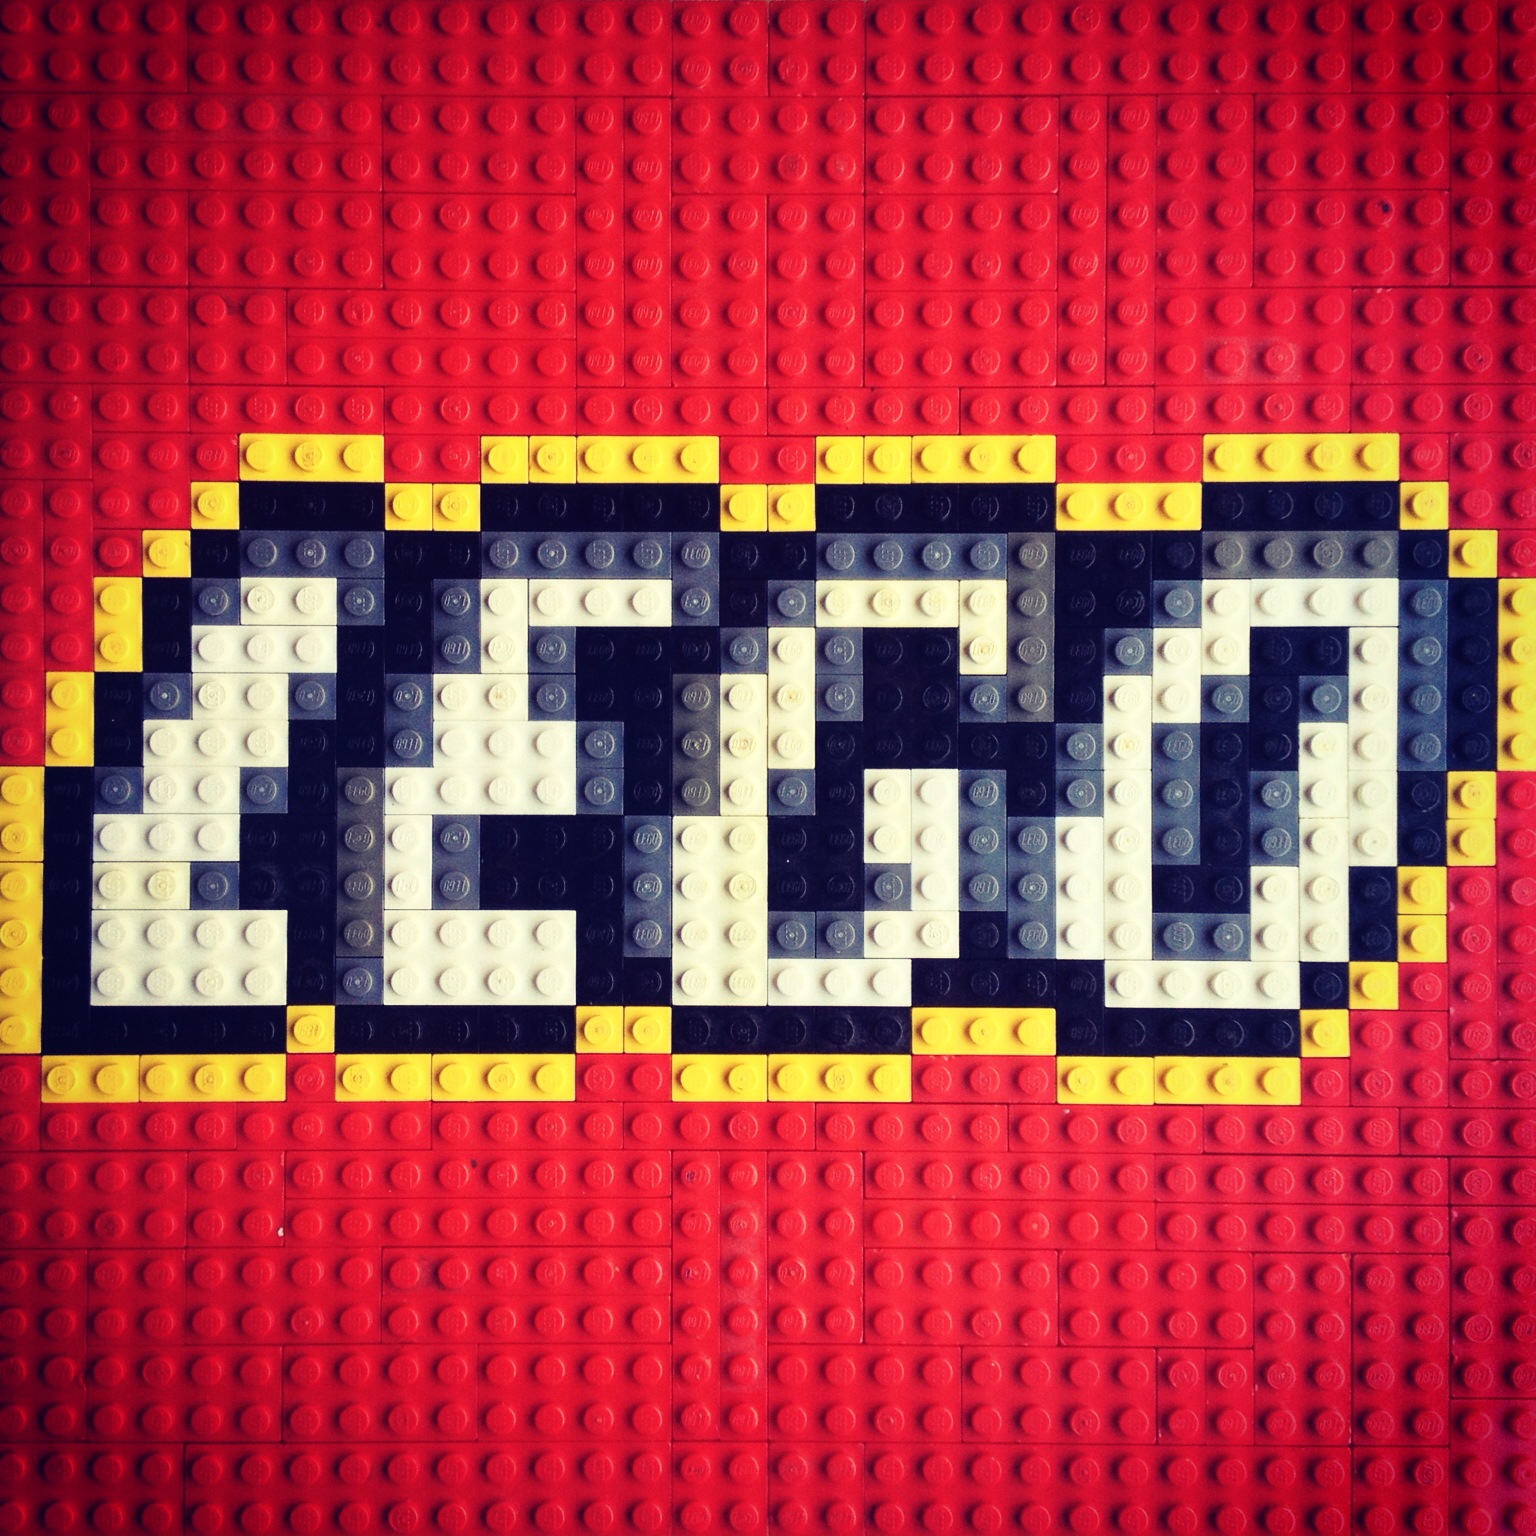 LegoGenre’s Lego Mosaic